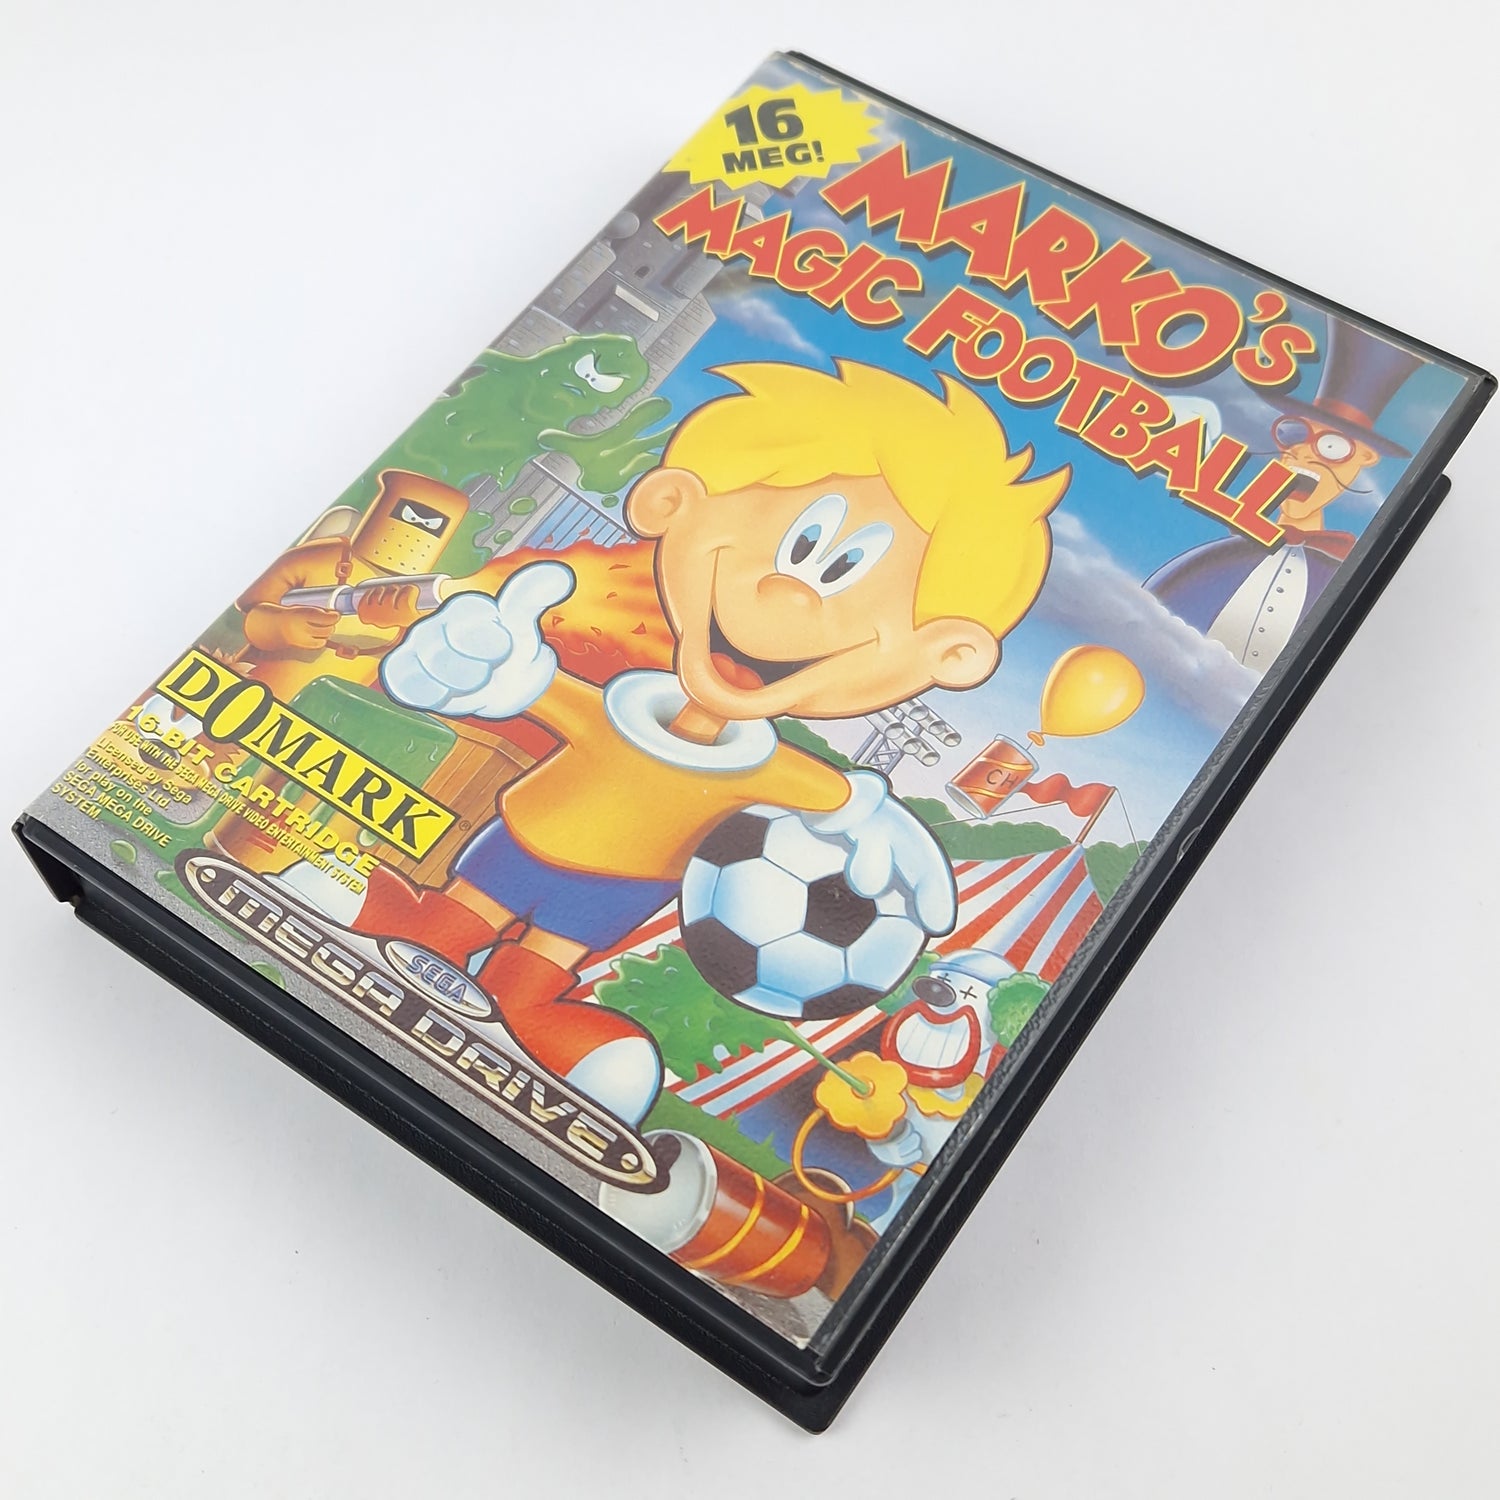 Sega Mega Drive Game: Markos Magic Football - Module Instructions OVP cib PAL